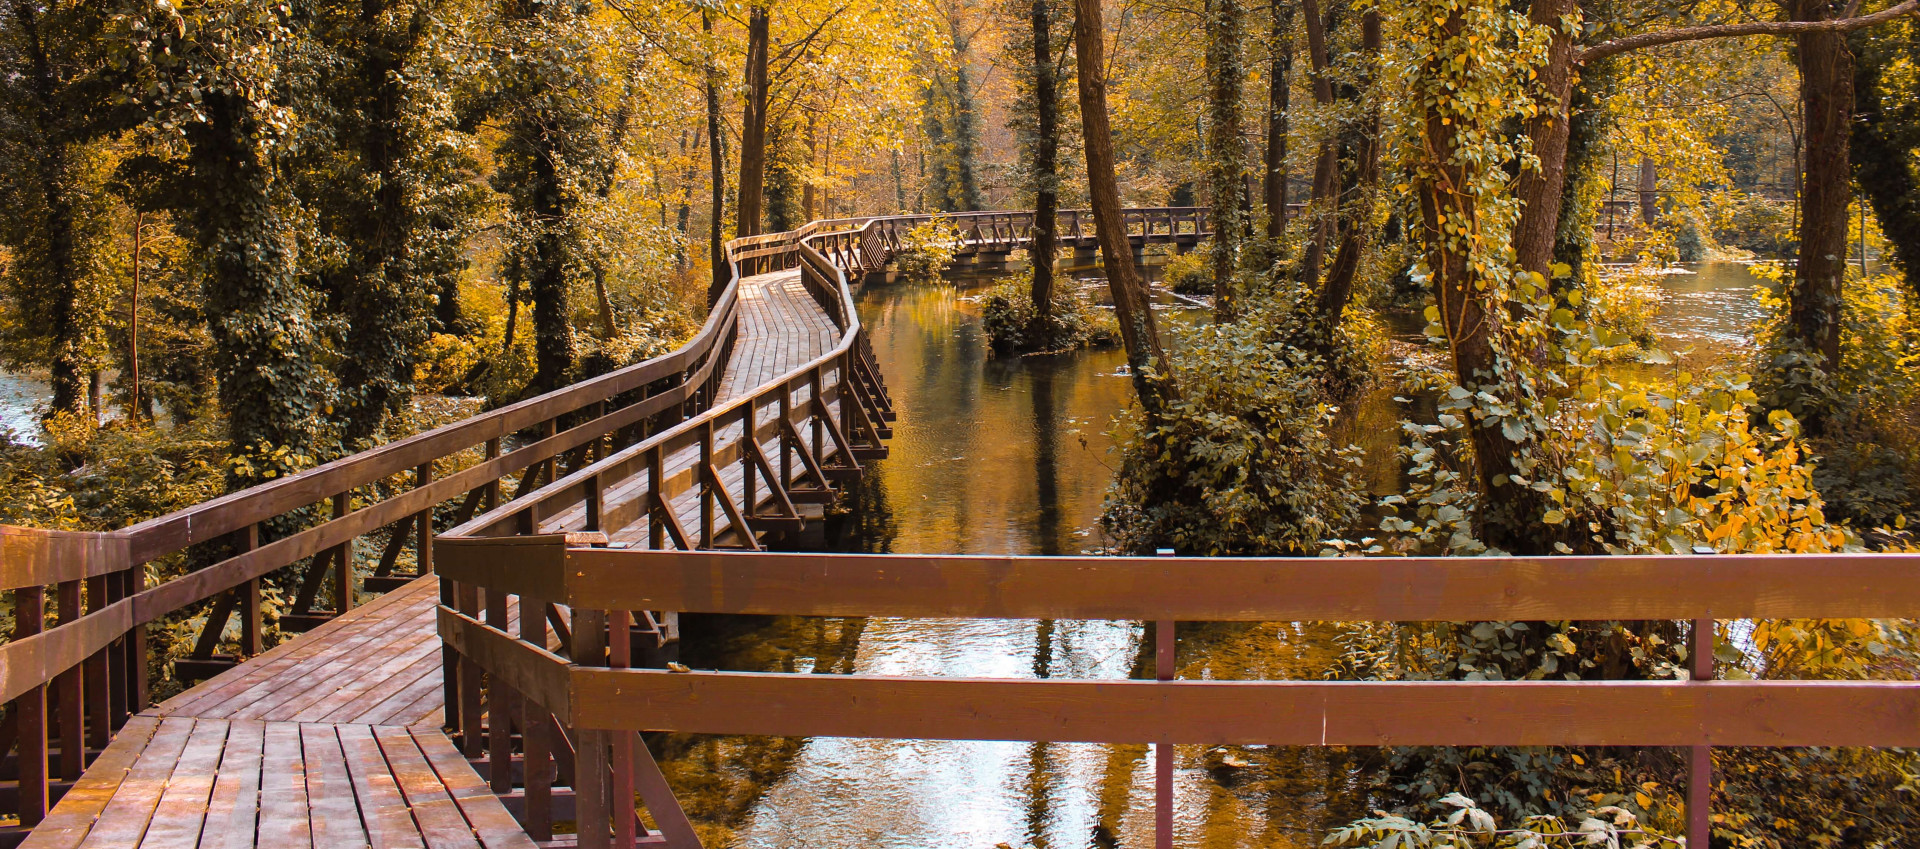 long brown wooden bridge going through the woods in fall season